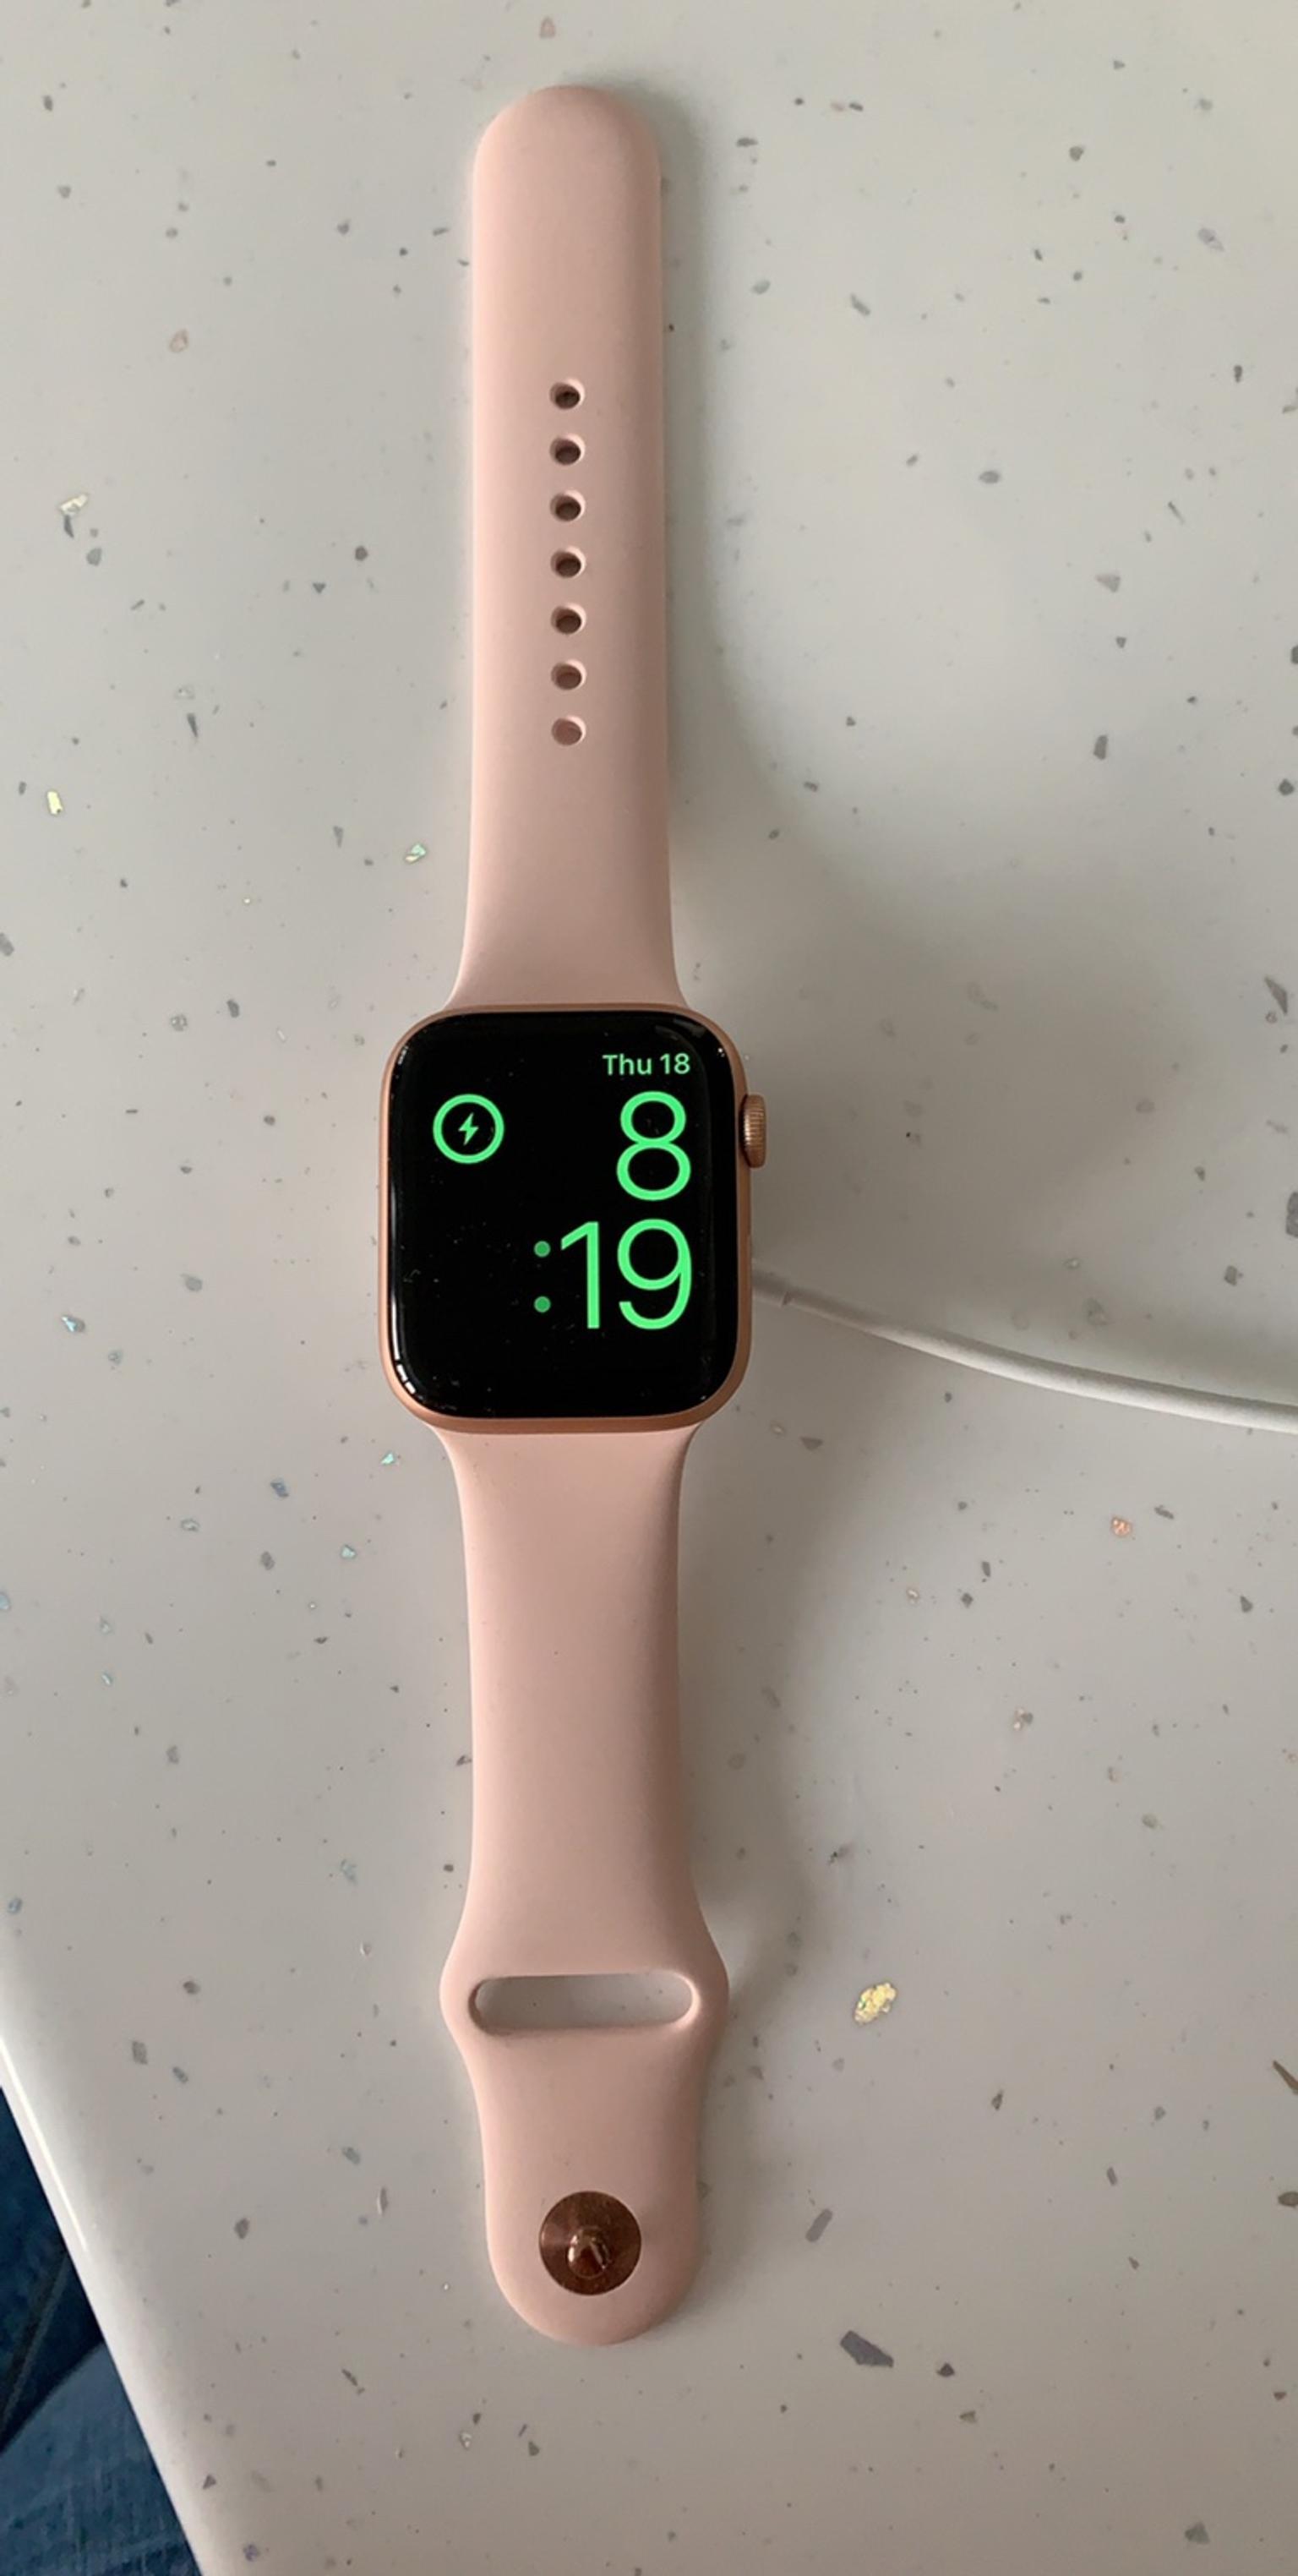 Apple Watch Series 4 Gps Ab 459 00 September 2020 Preise Preisvergleich Bei Idealo De